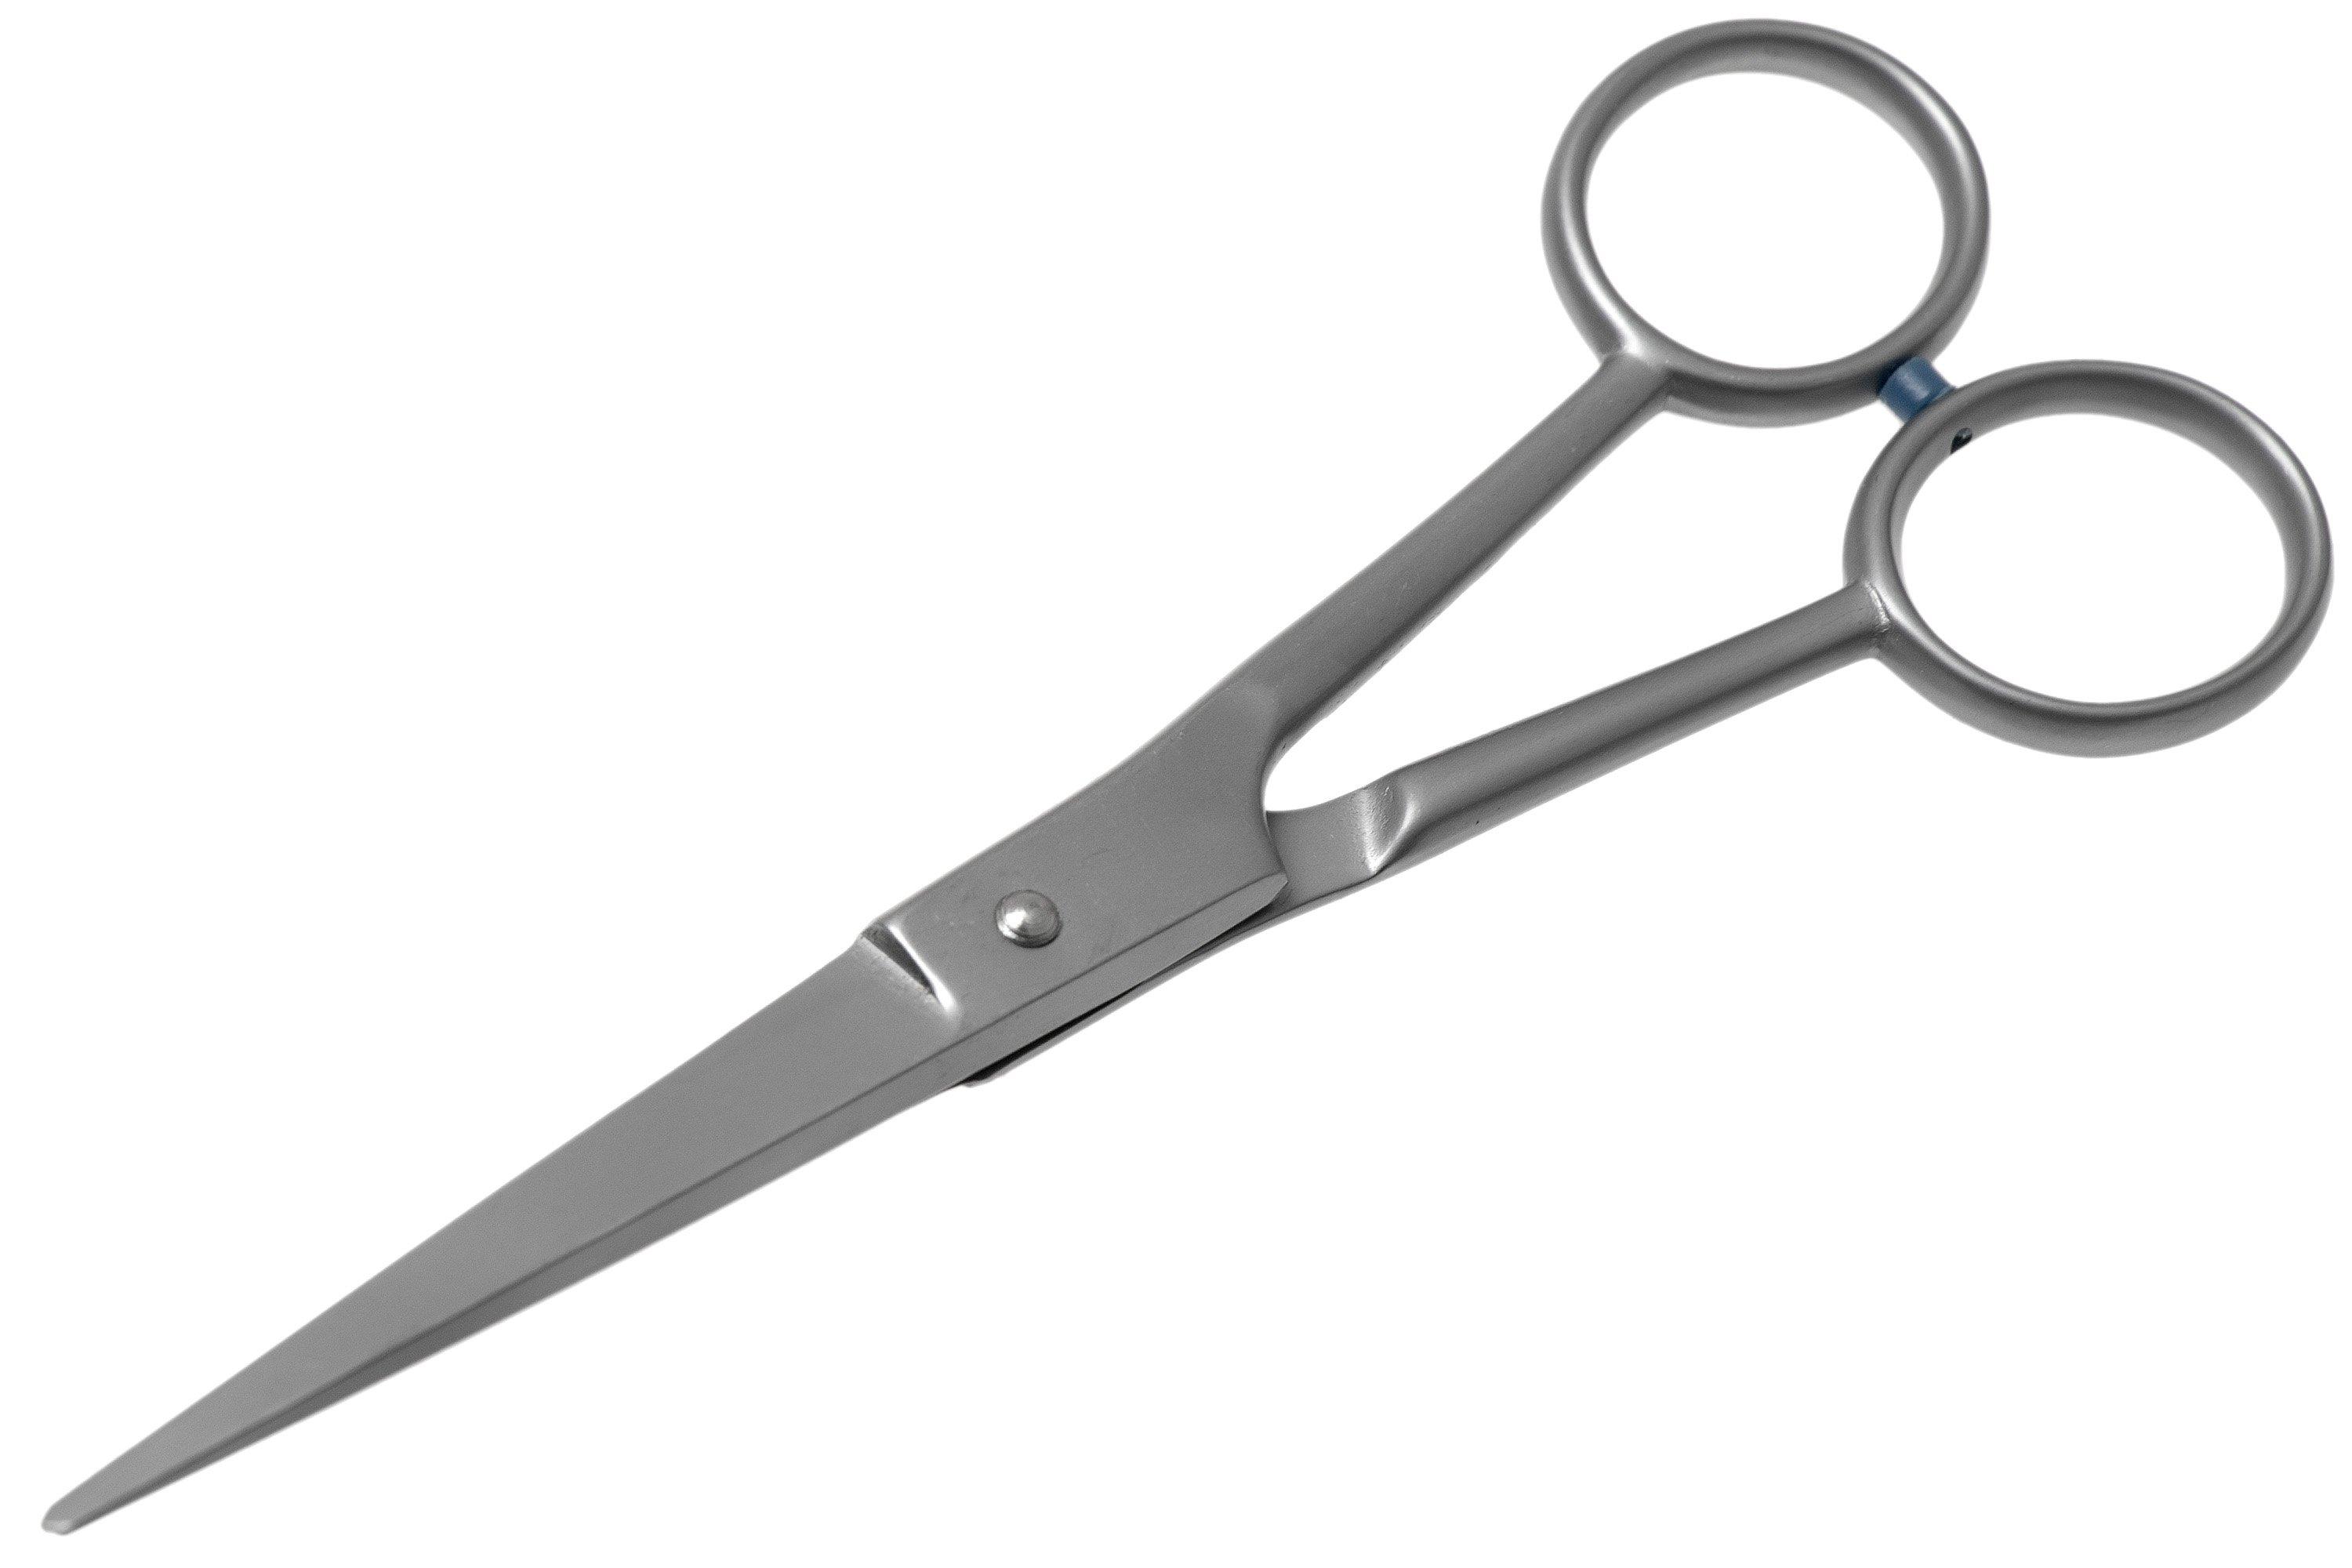 Kershaw Skeeter 3, 1216X scissors  Advantageously shopping at